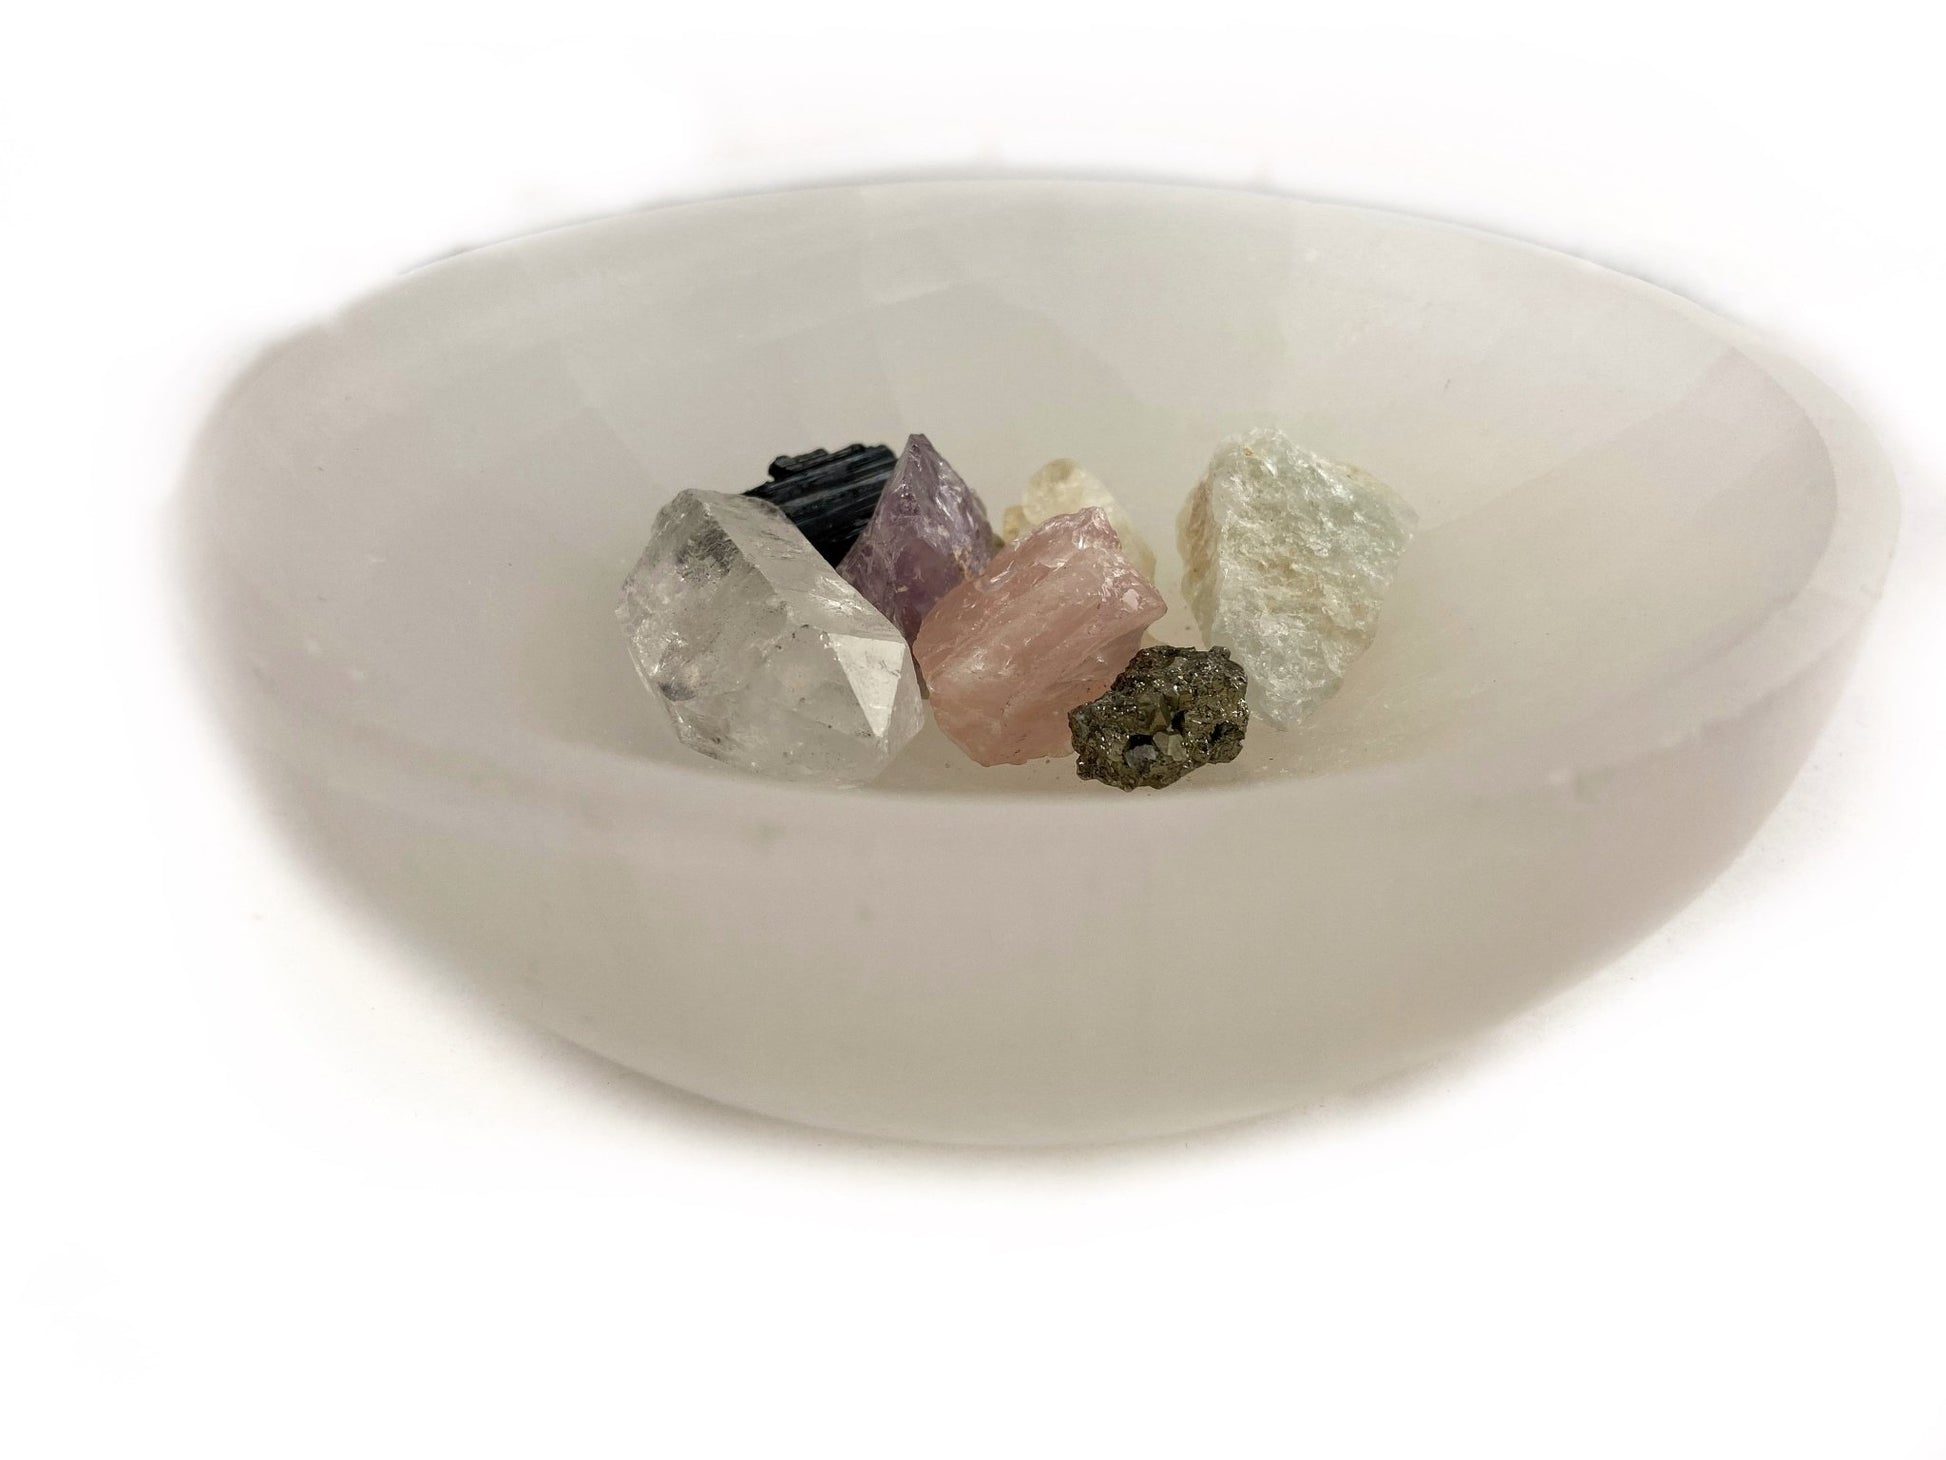 Large Polished Selenite Charging Crystal Bowl - Ariana Ost